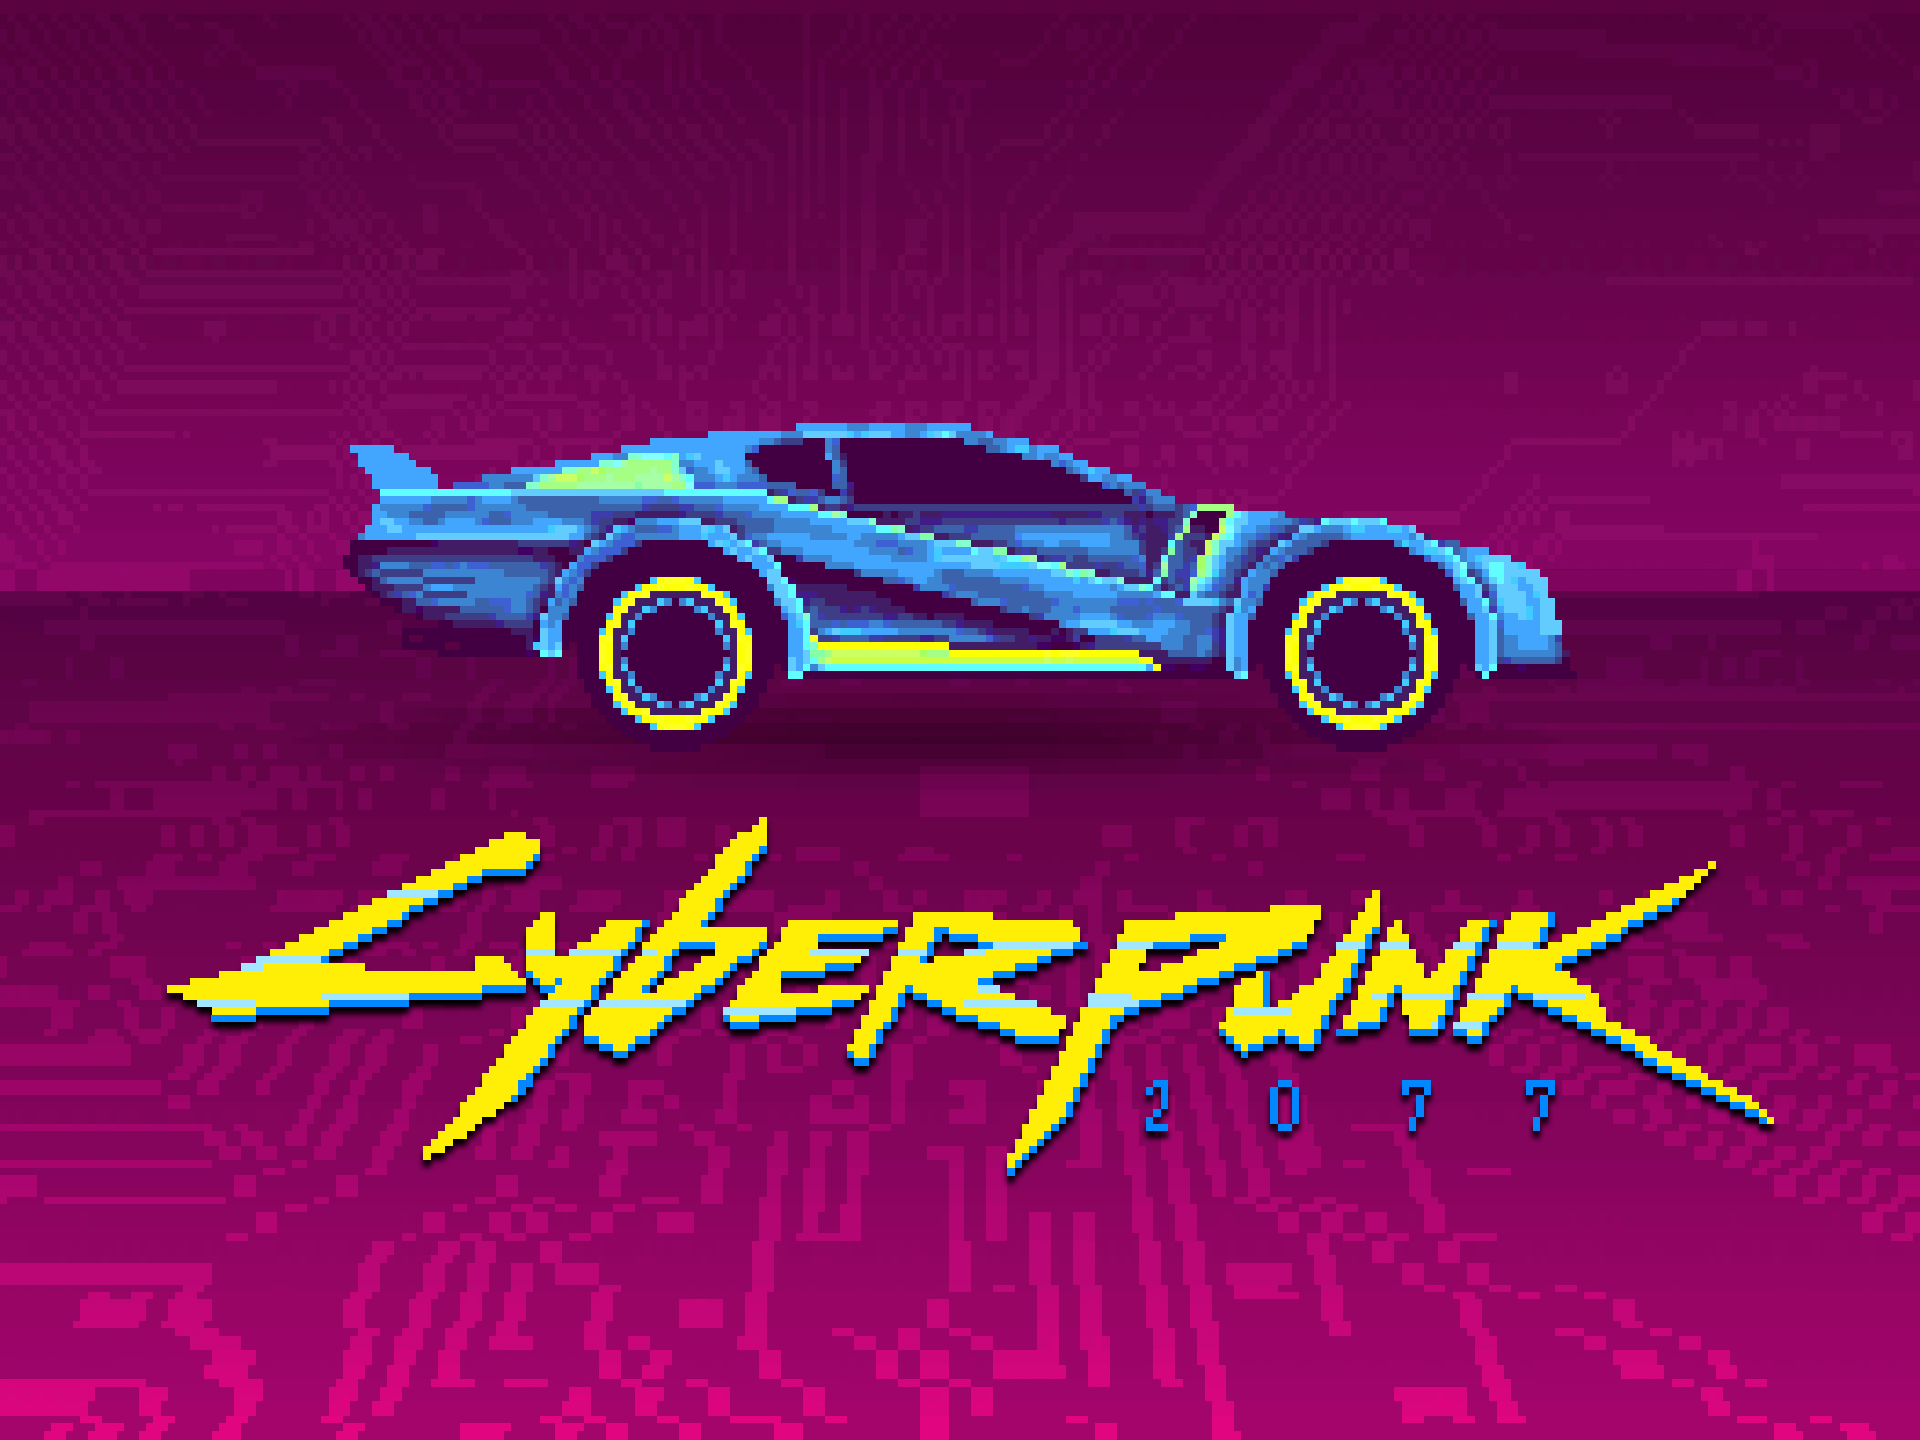 Henry Dan – Cyberpunk 2077 Pixel Art